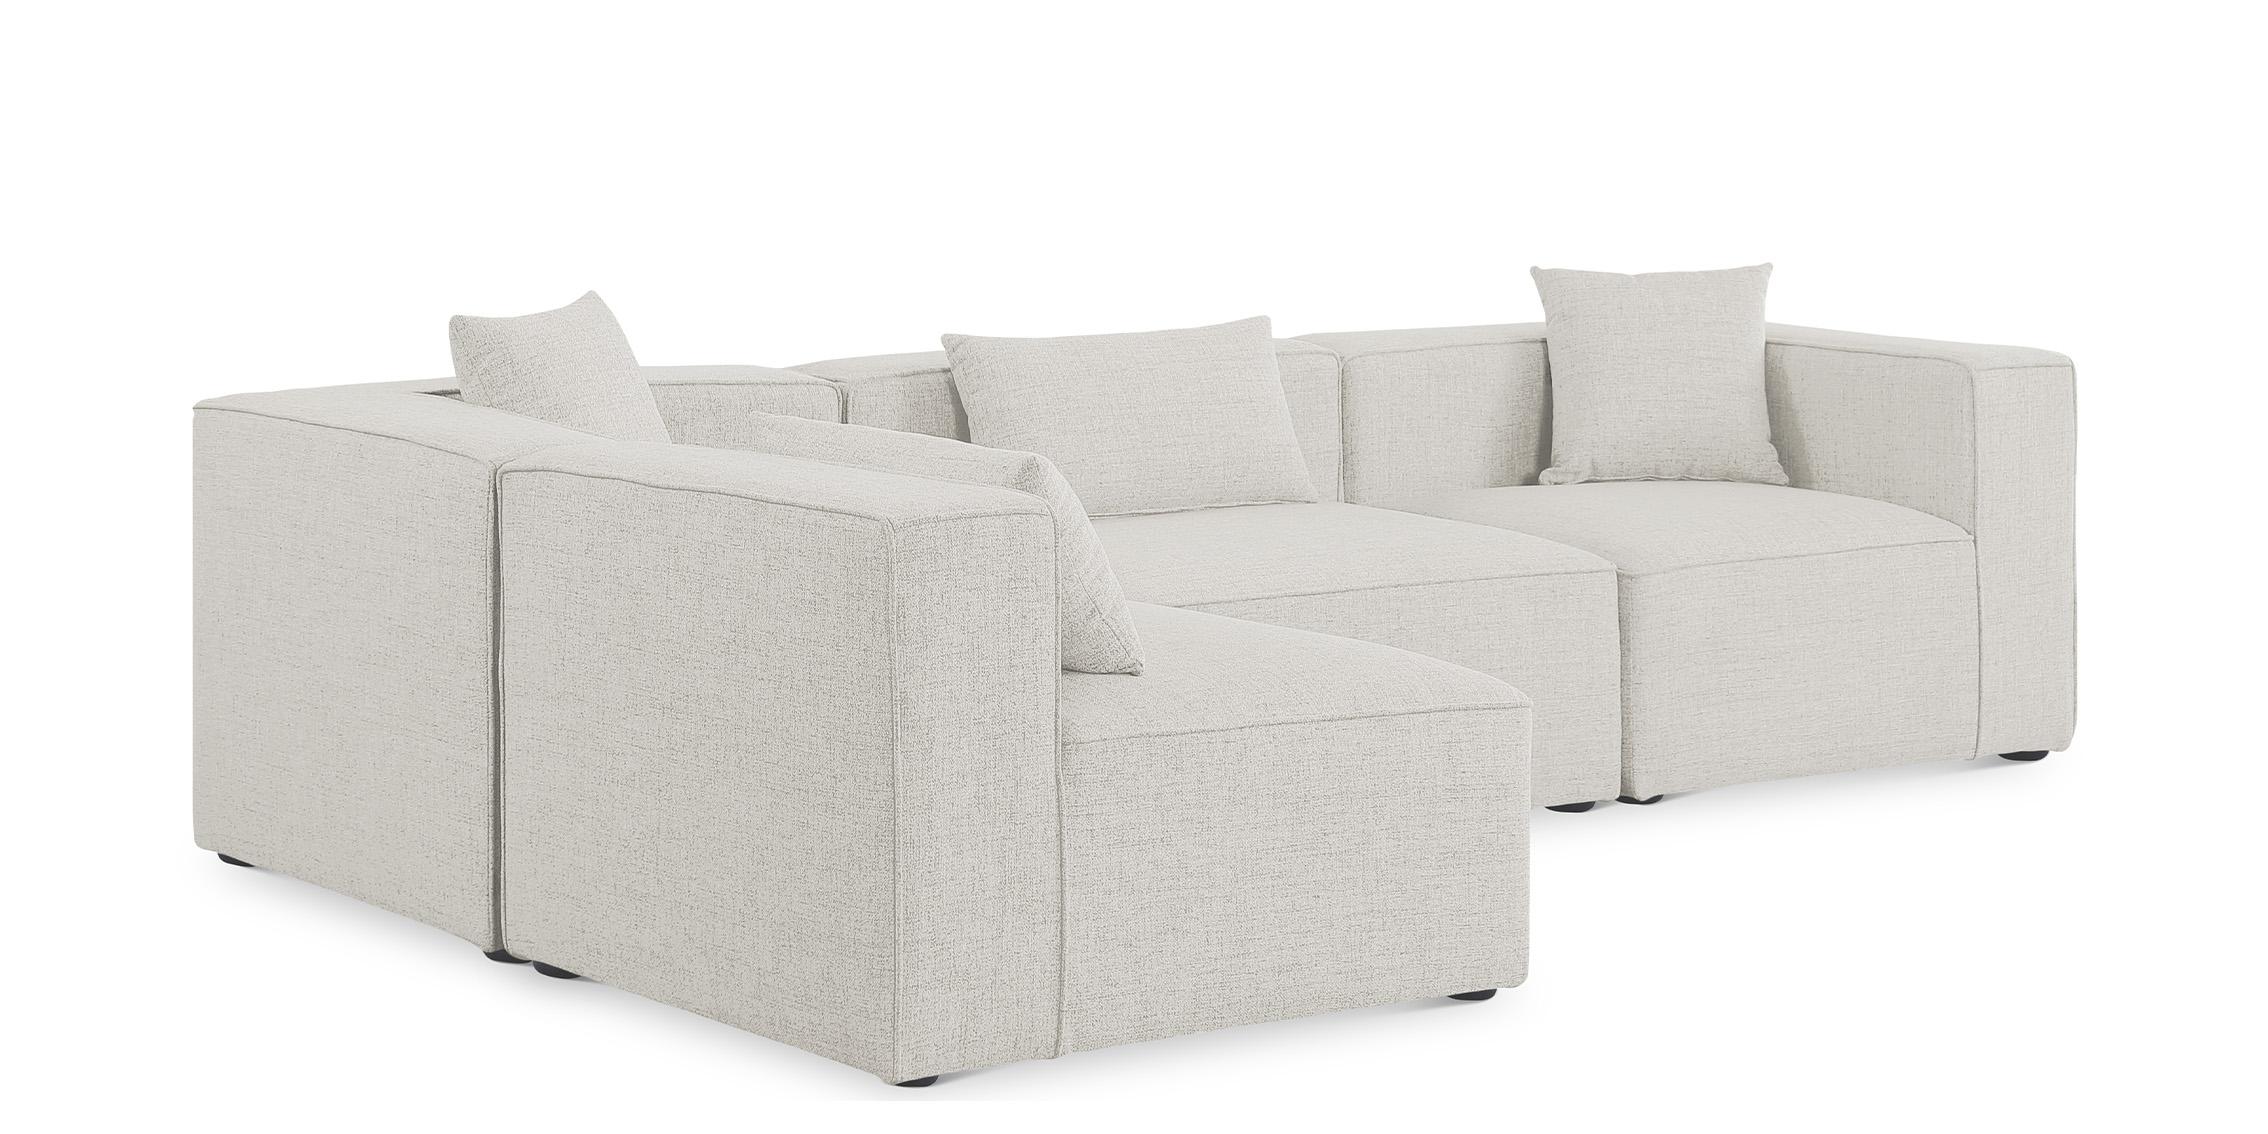 Contemporary, Modern Modular Sectional Sofa CUBE 630Cream-Sec4B 630Cream-Sec4B in Cream Linen